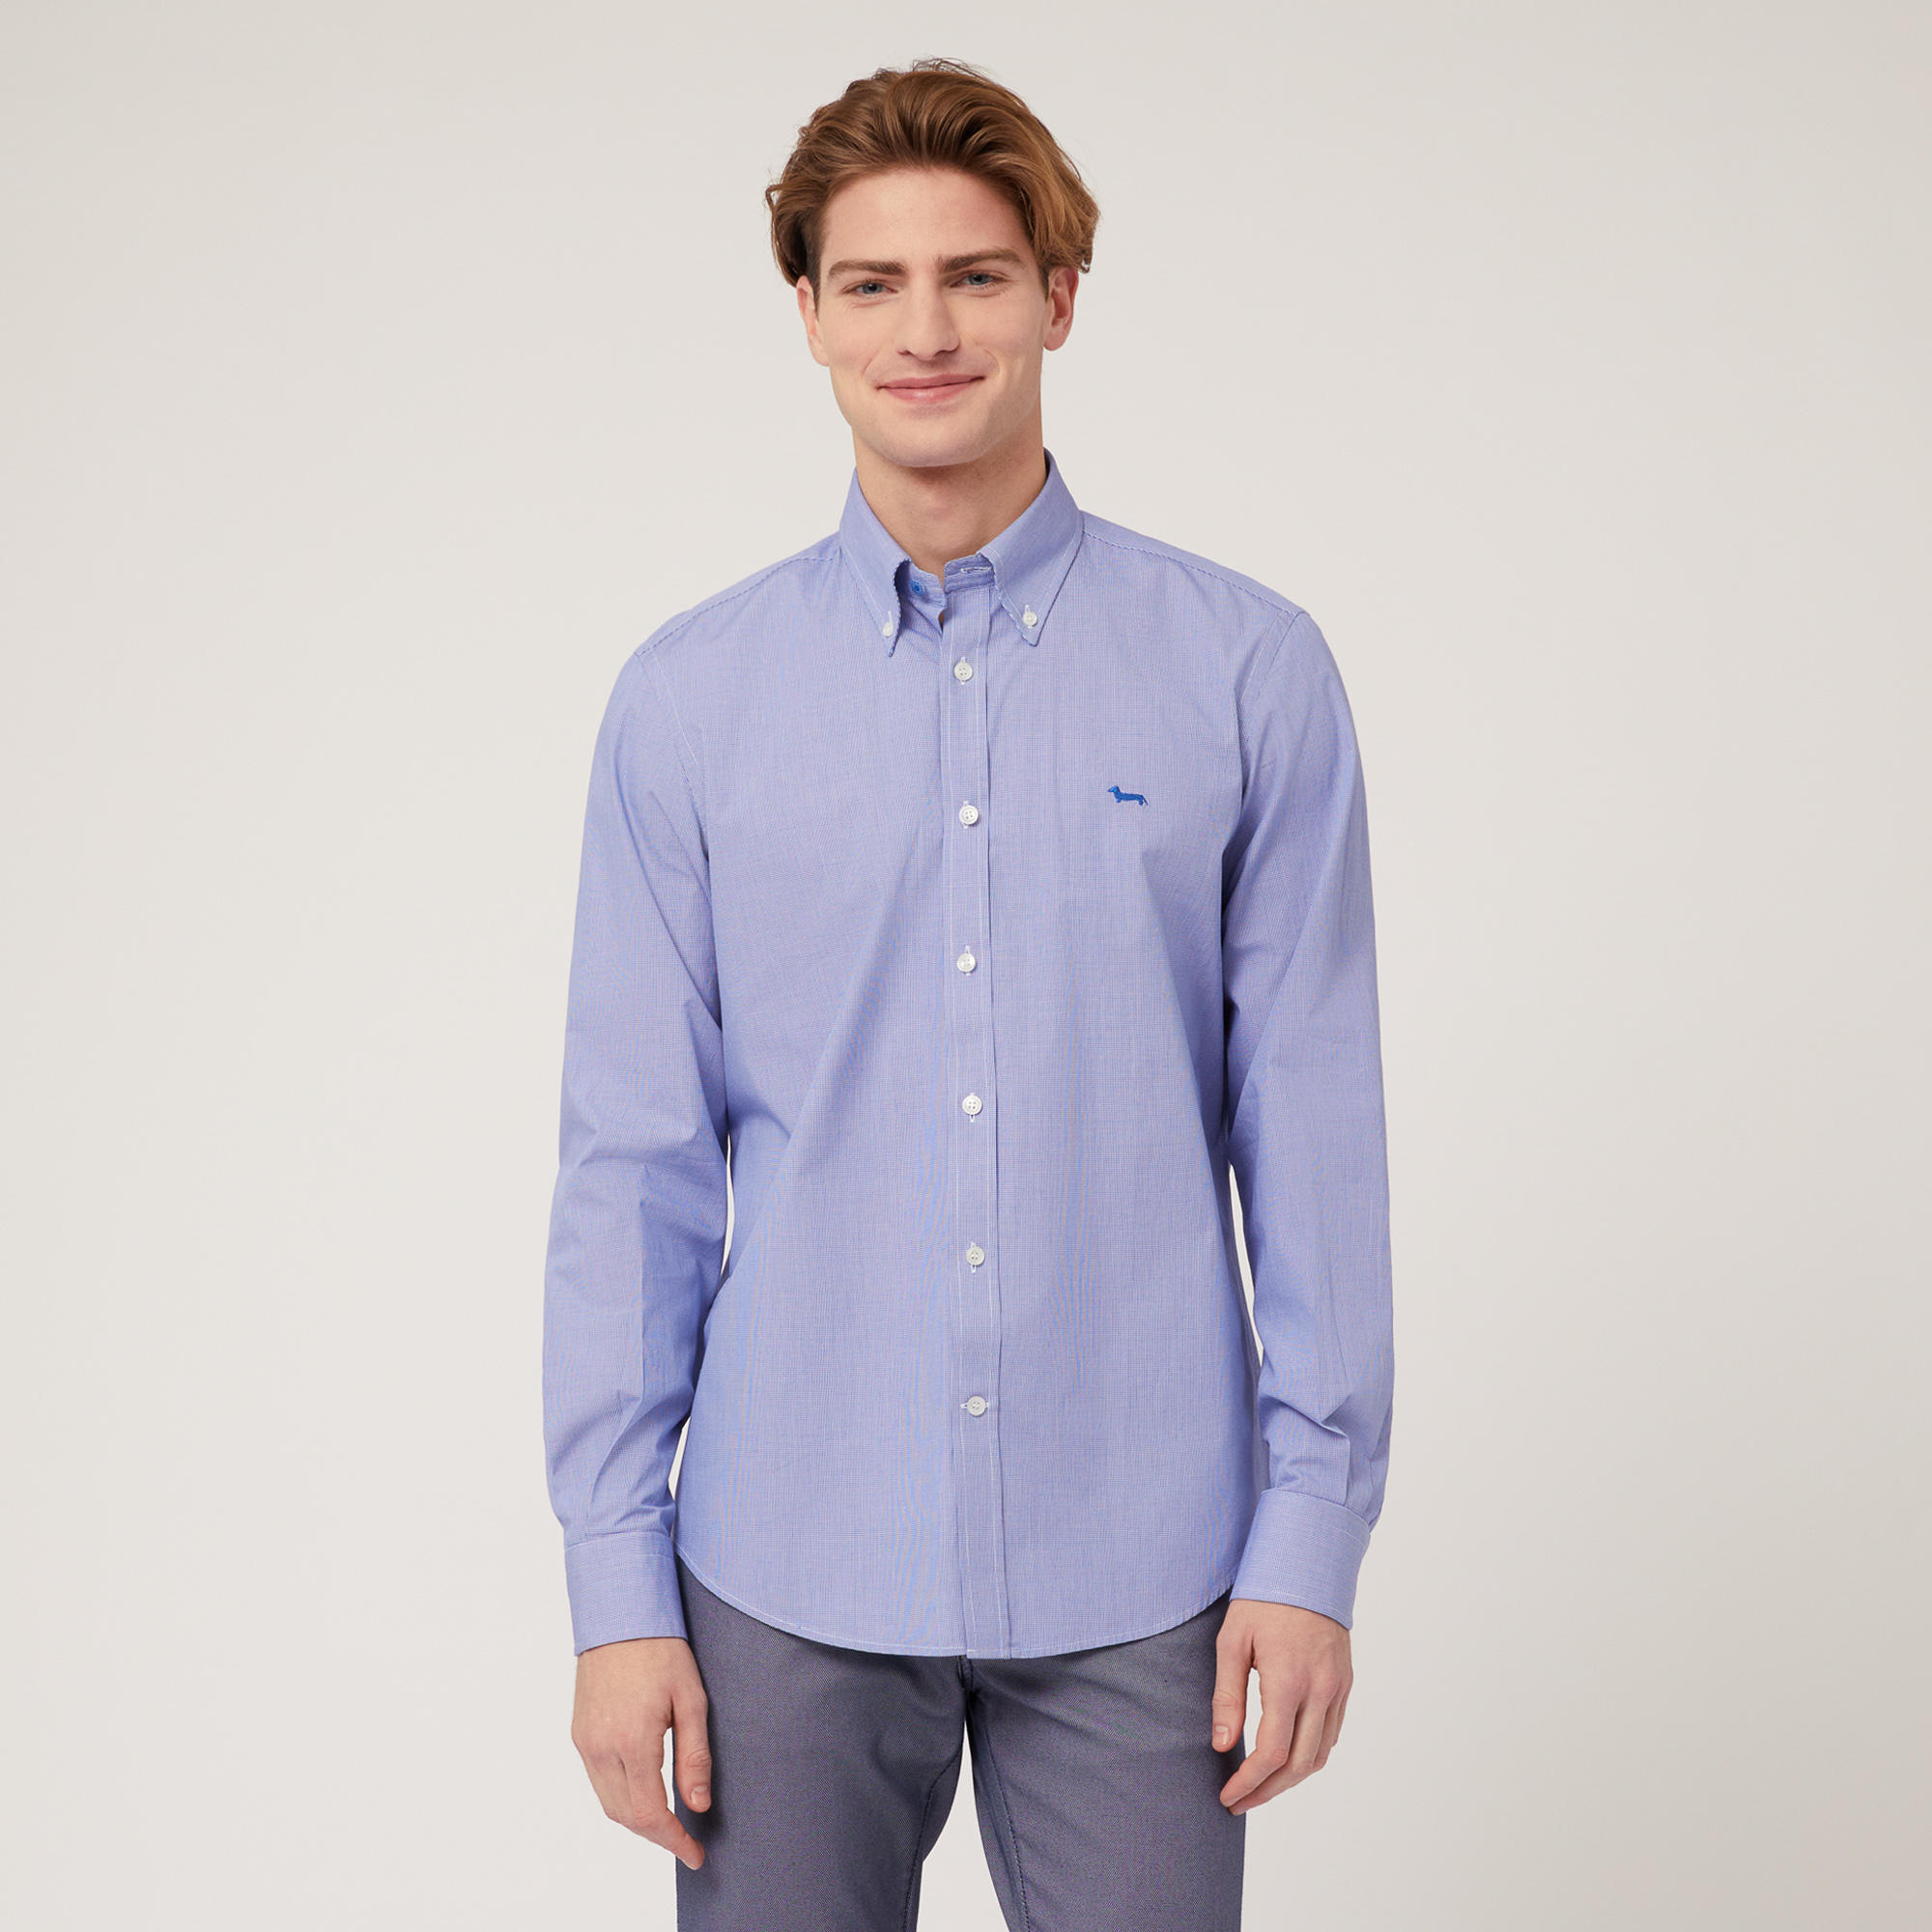 Regular Fit Cotton Shirt, Blue, large